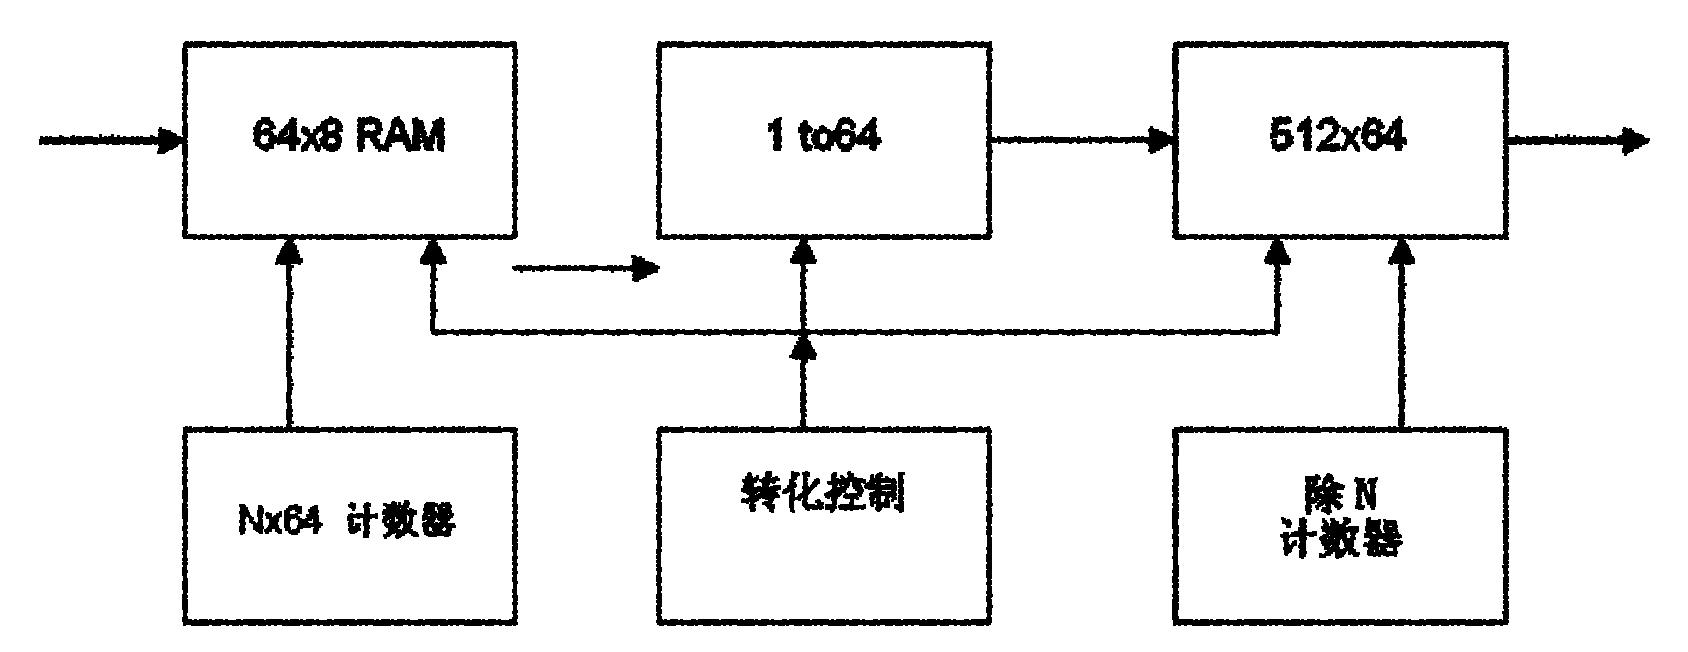 Error code testing system based on FPGA (Field Programmable Gate Array)